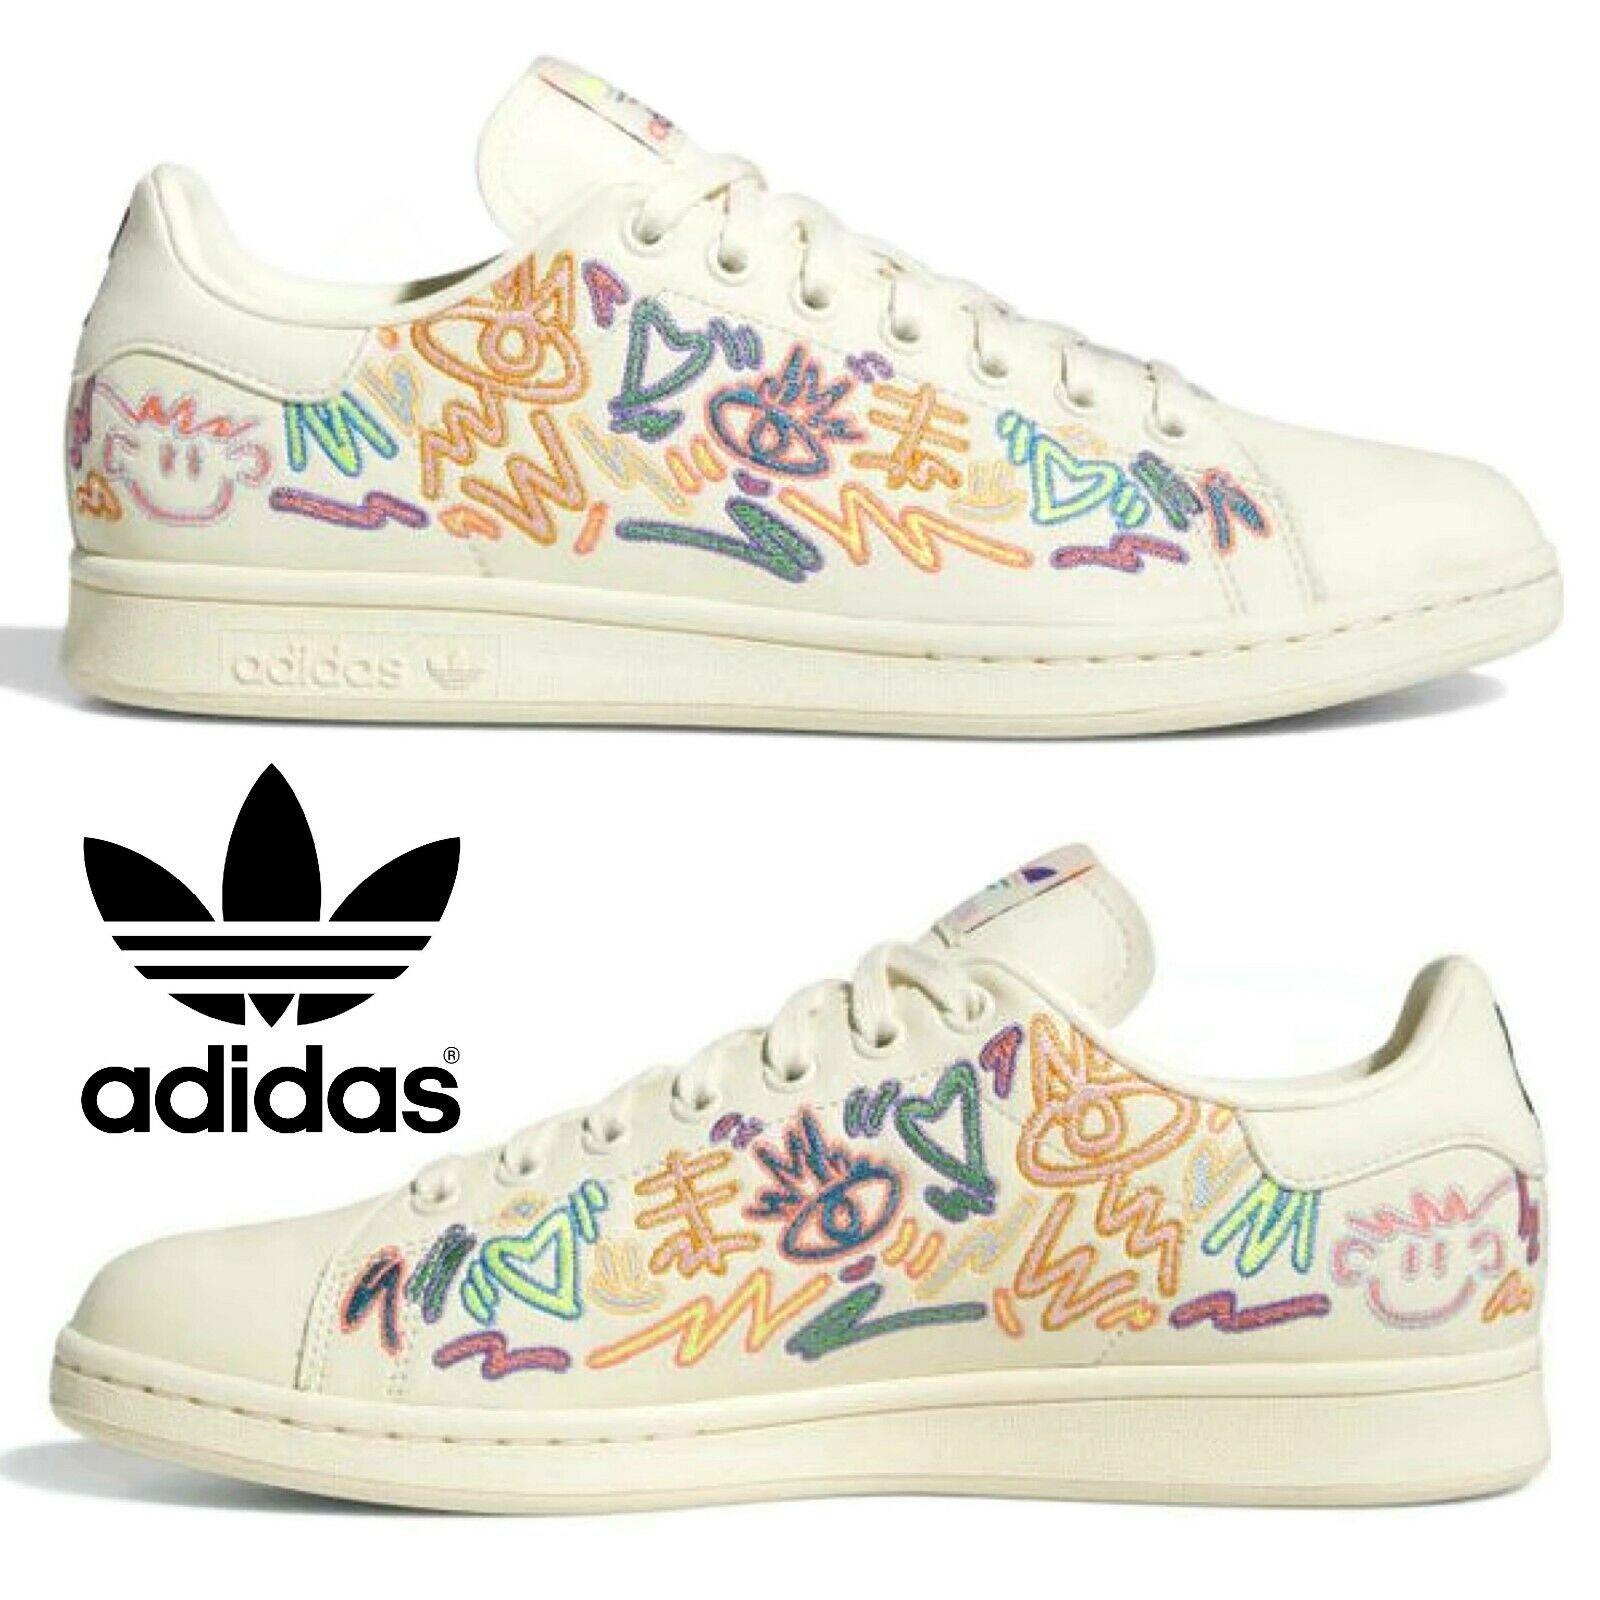 Adidas Originals Stan Smith Men`s Sneakers Comfort Sport Casual Shoes Cream